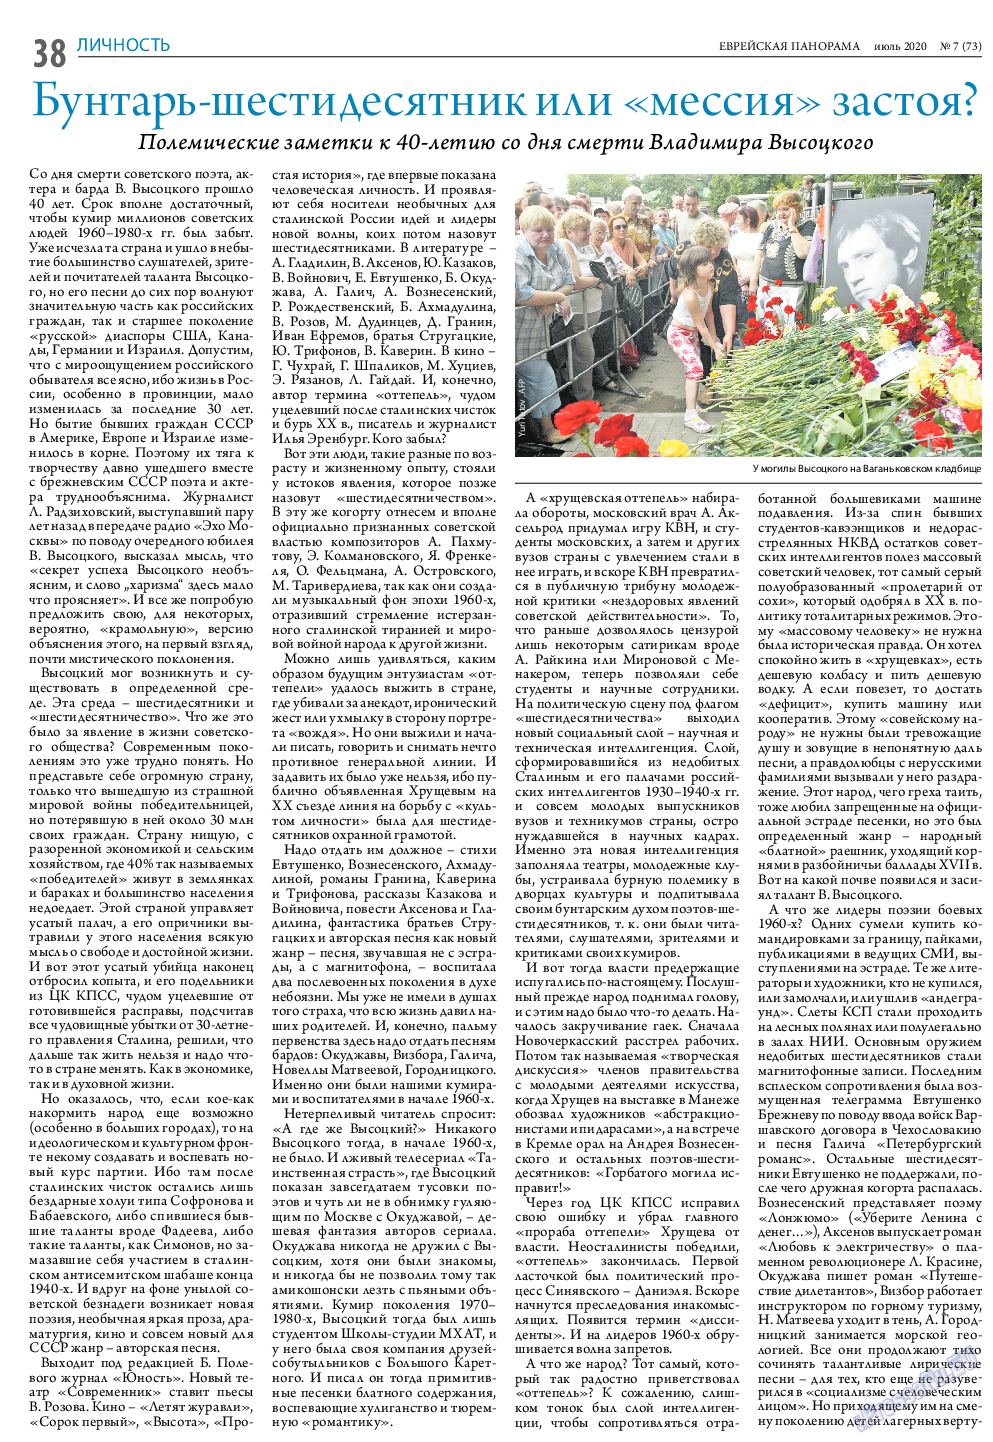 Еврейская панорама, газета. 2020 №7 стр.38